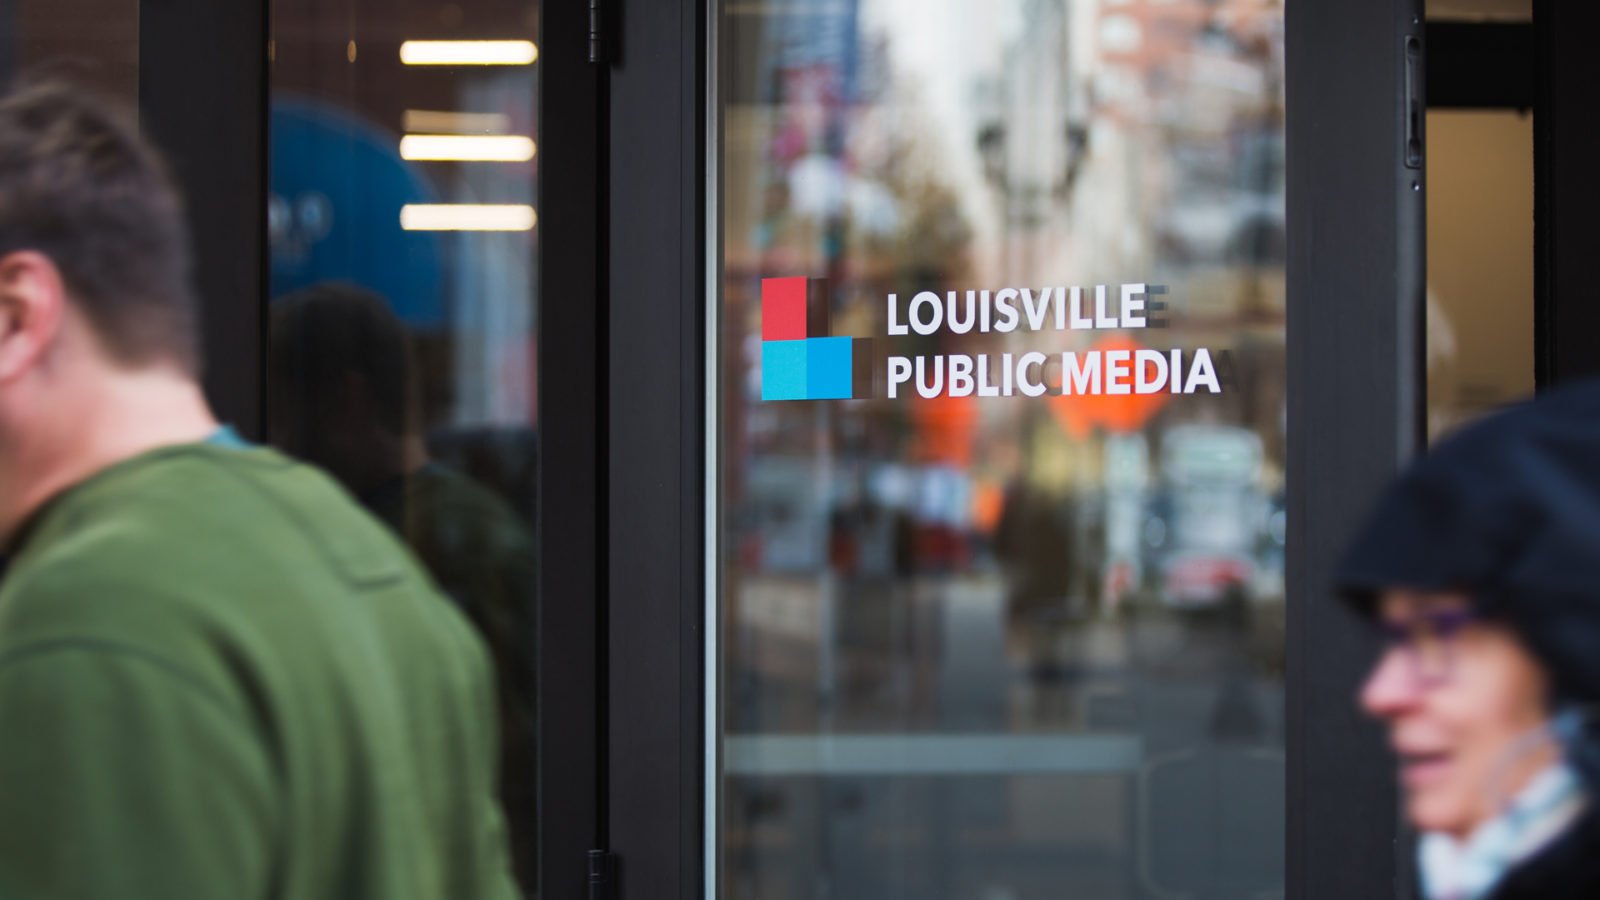 A Brand Identity for Louisville Public Media by Bullhorn Creative